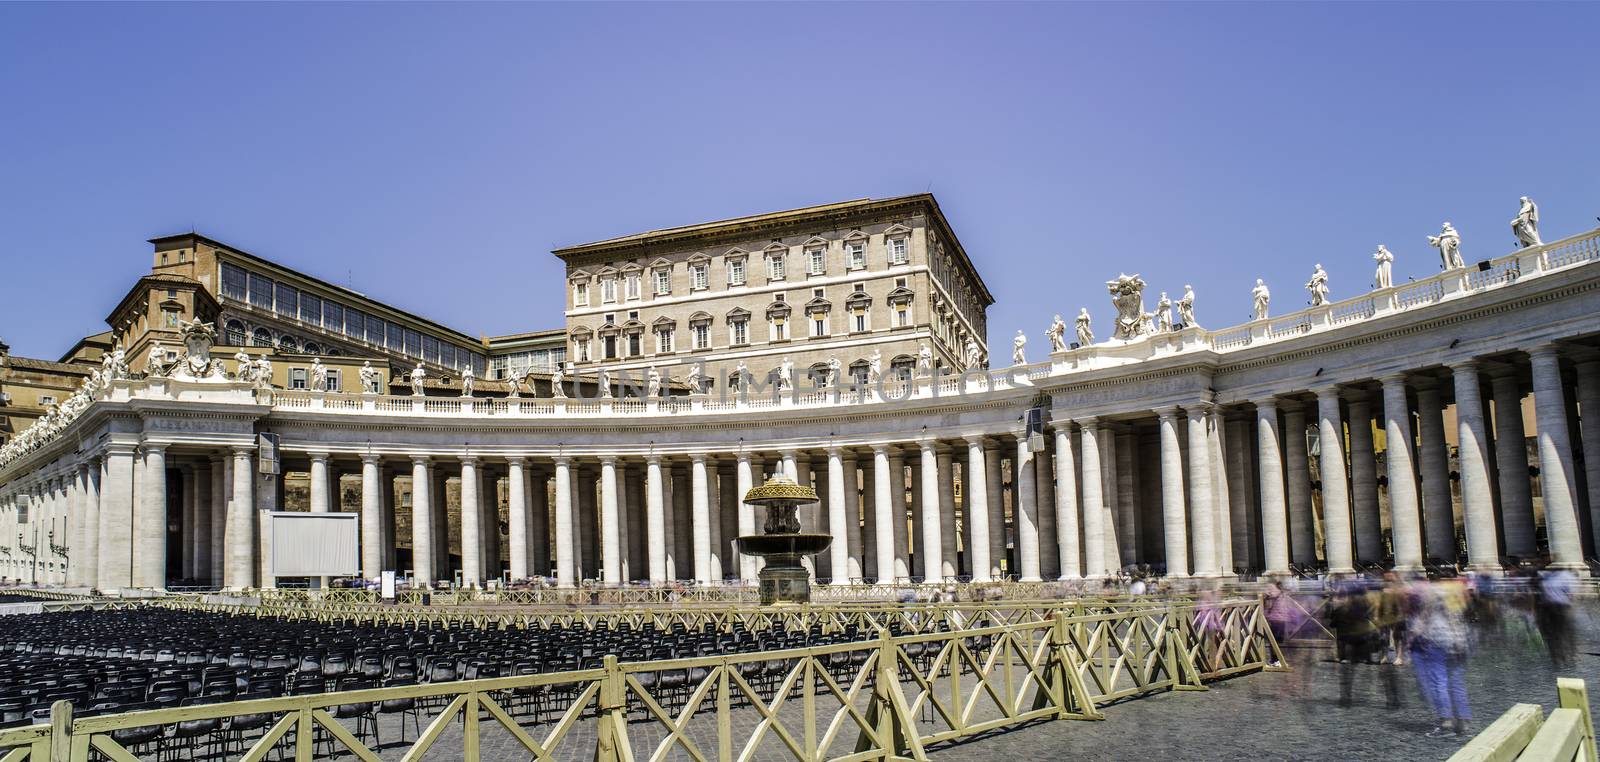 St. Peter's Squar, Vatican, Rome by deyan_georgiev